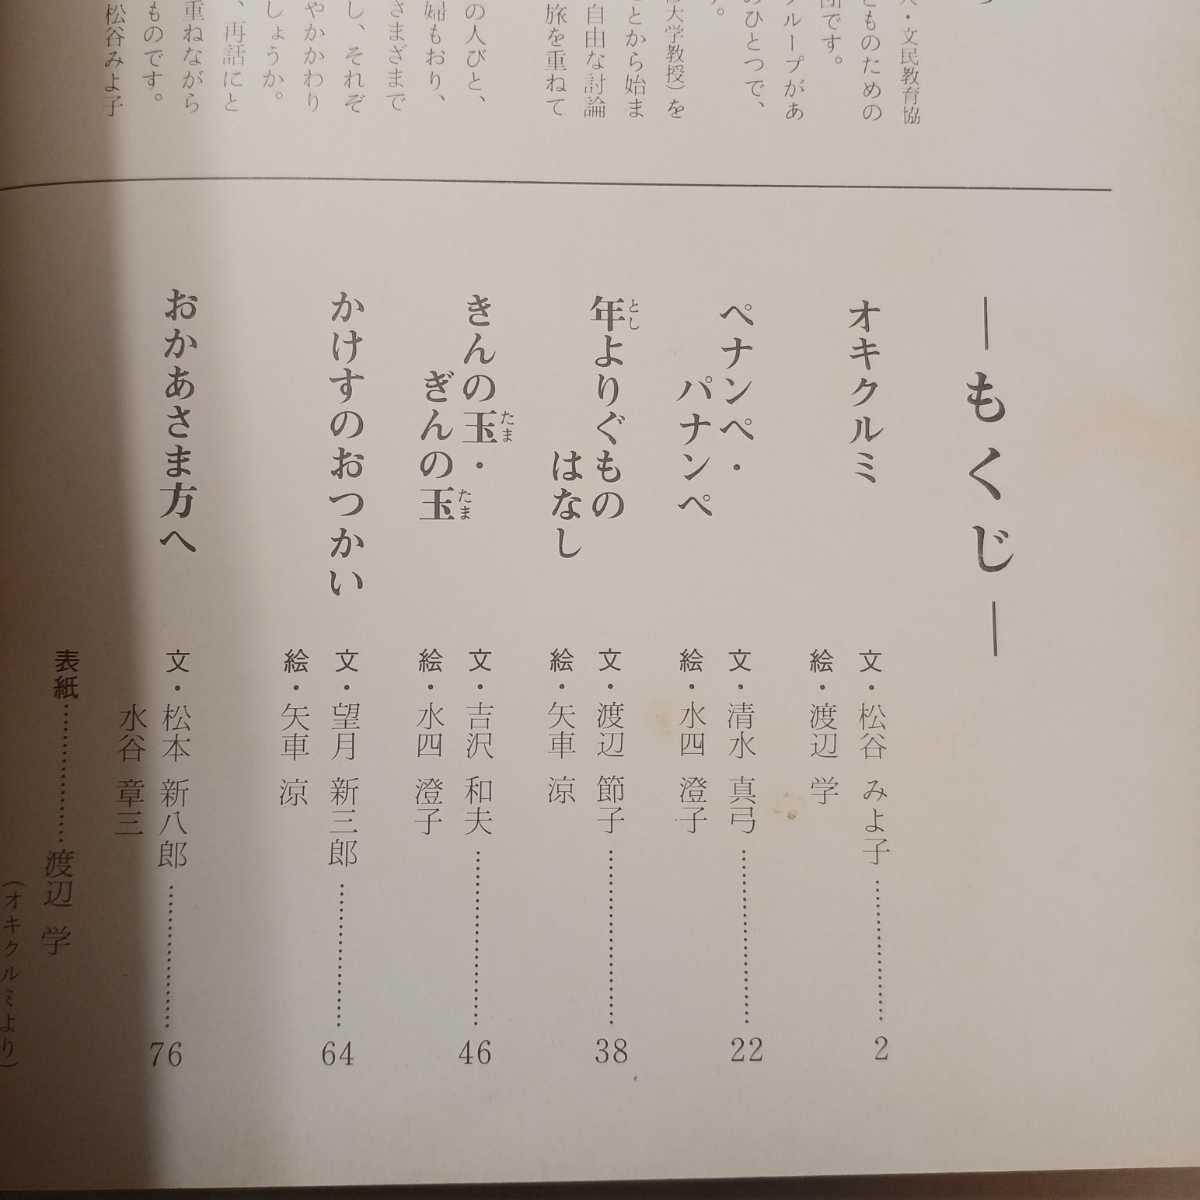 zaa-397♪日本の民話 特選オールカラー版 １ 北海道 著者日本民話の会 （編）世界文化社　1979年